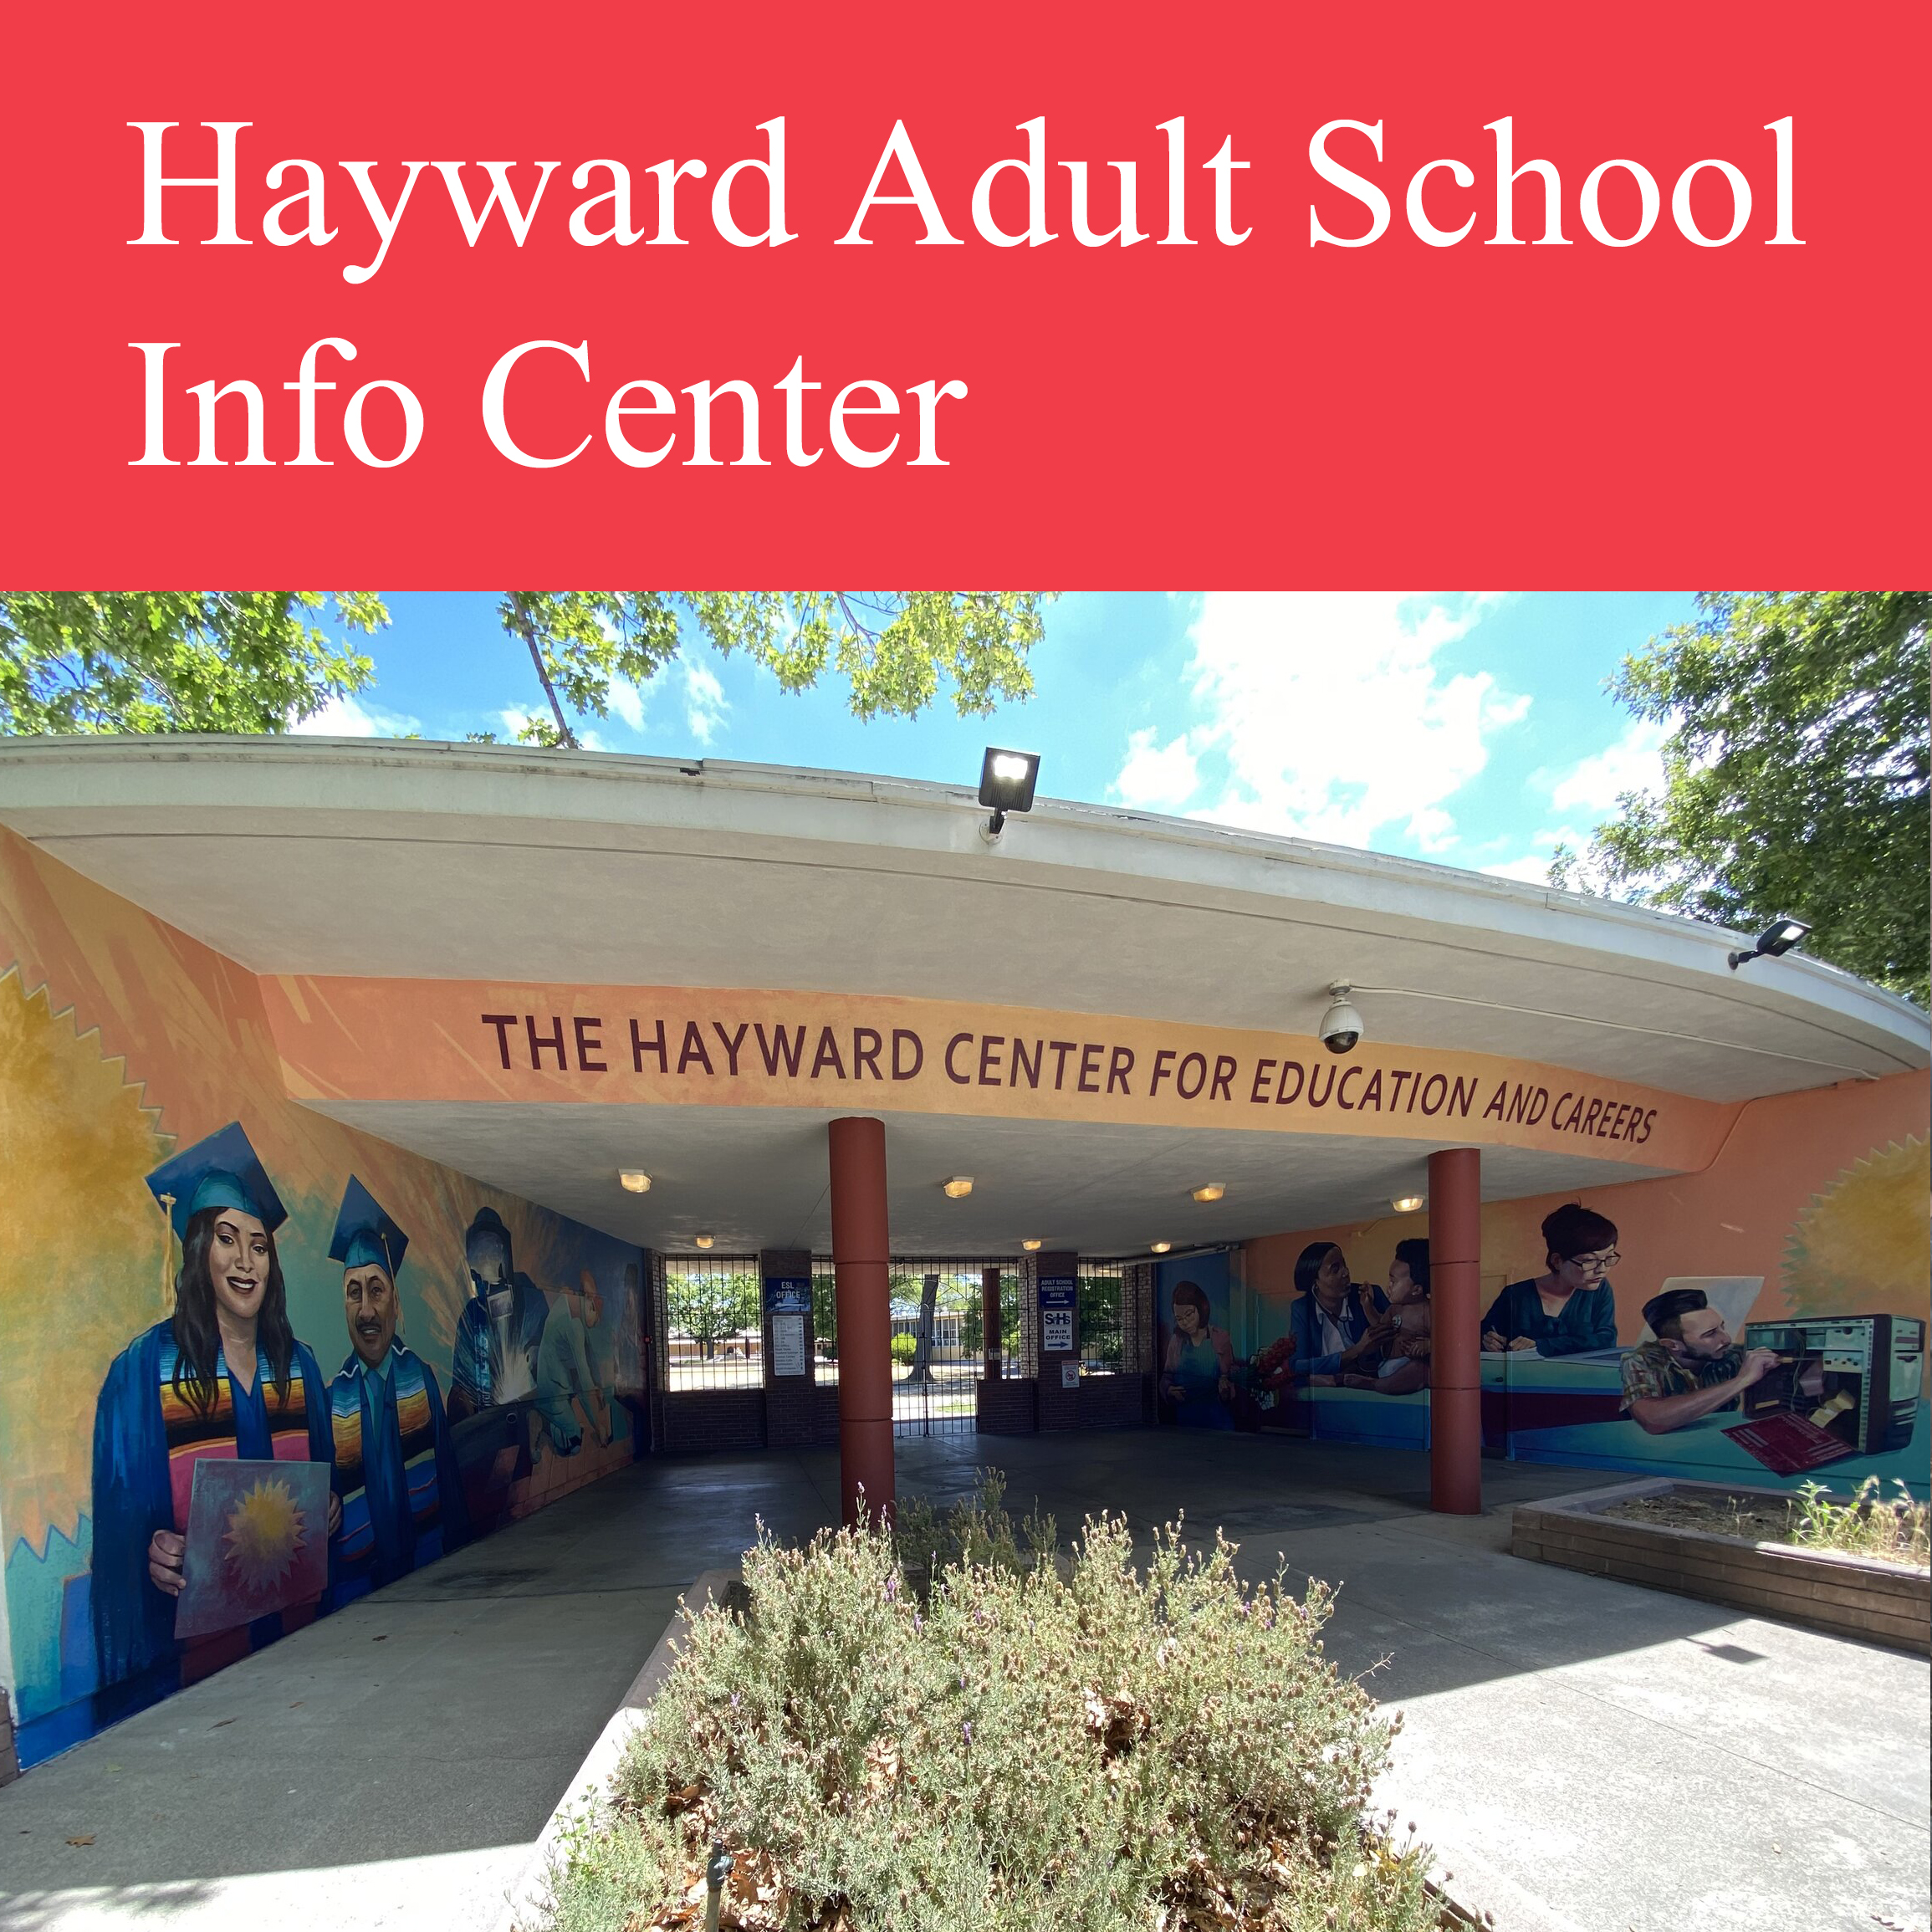 entrance to Hayward Adult School